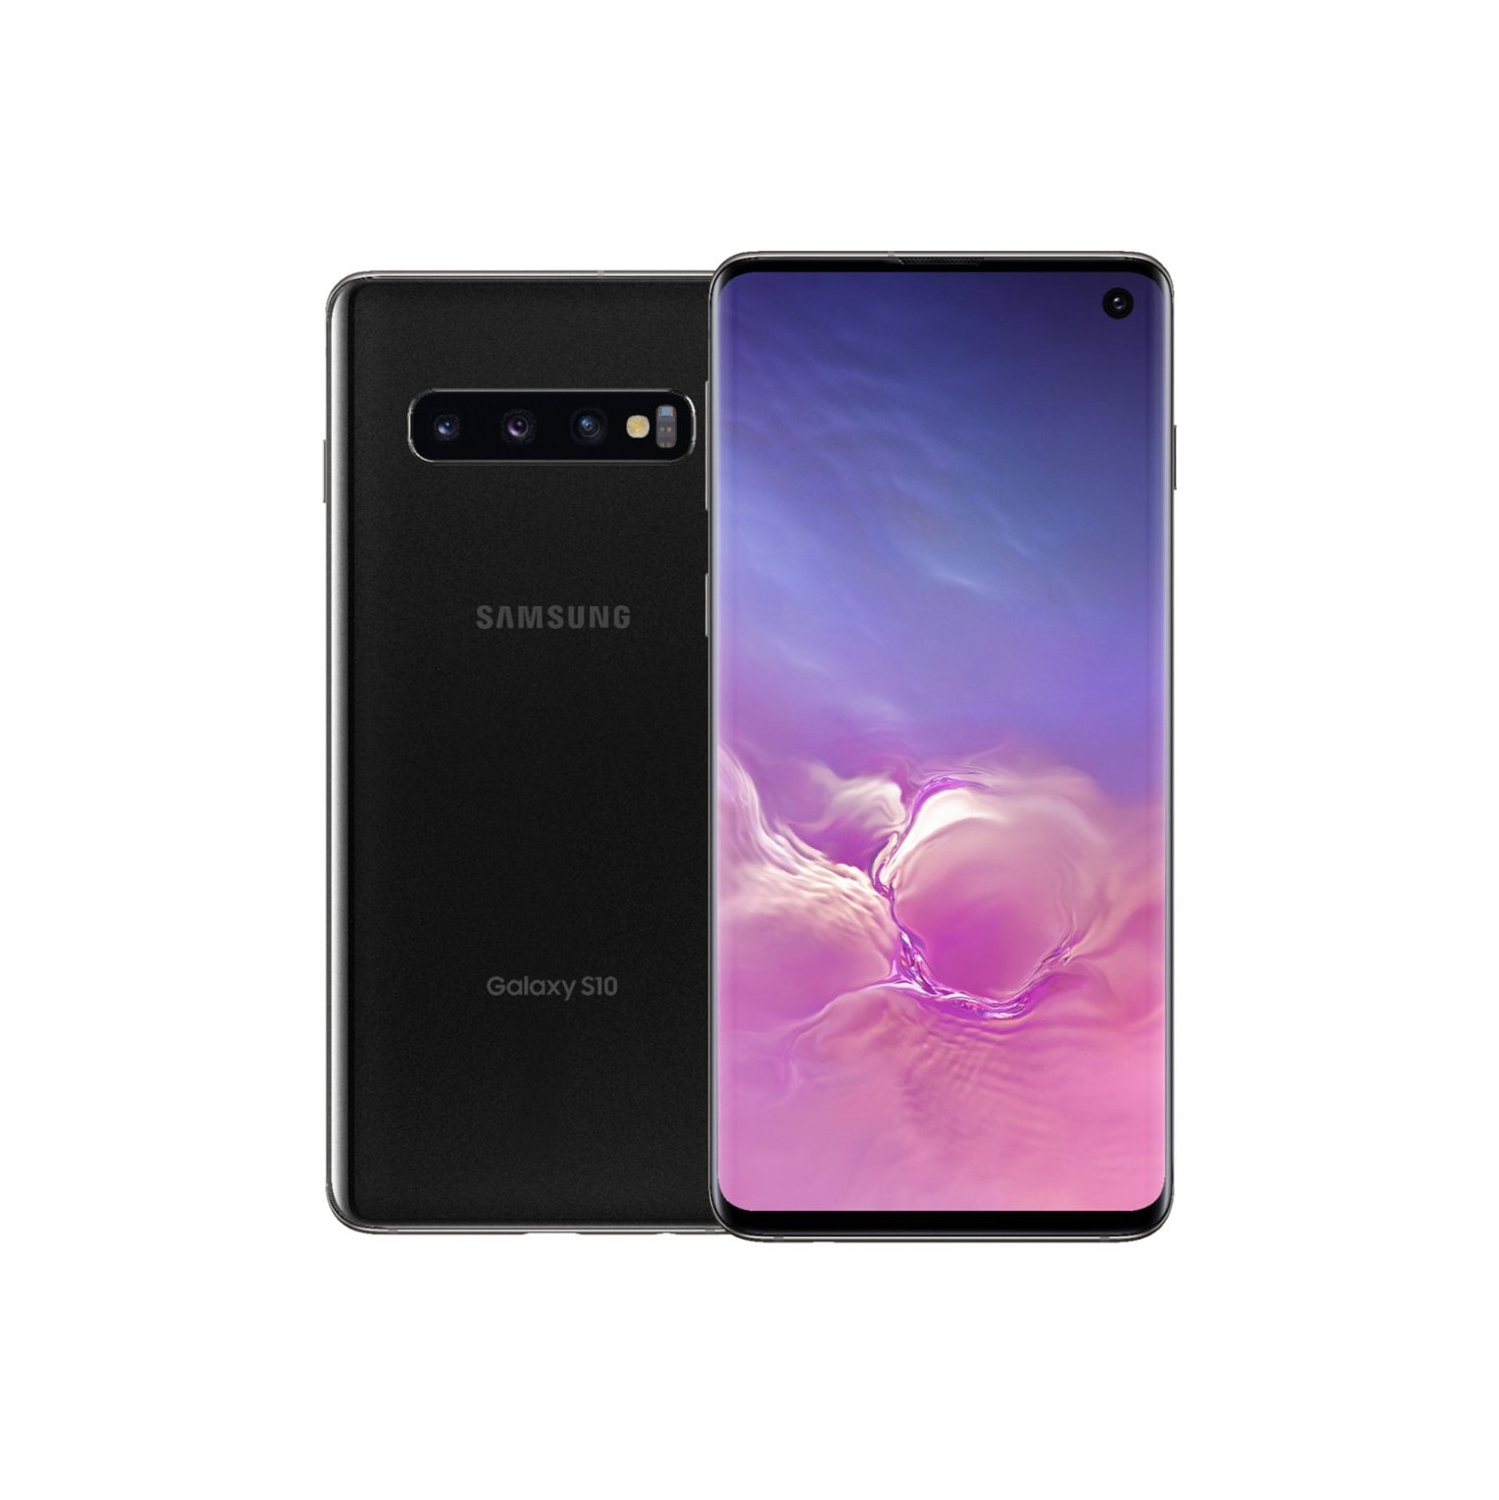 Refurbished (Good) - Samsung Galaxy S10 128GB Smartphone - Prism Black - Unlocked